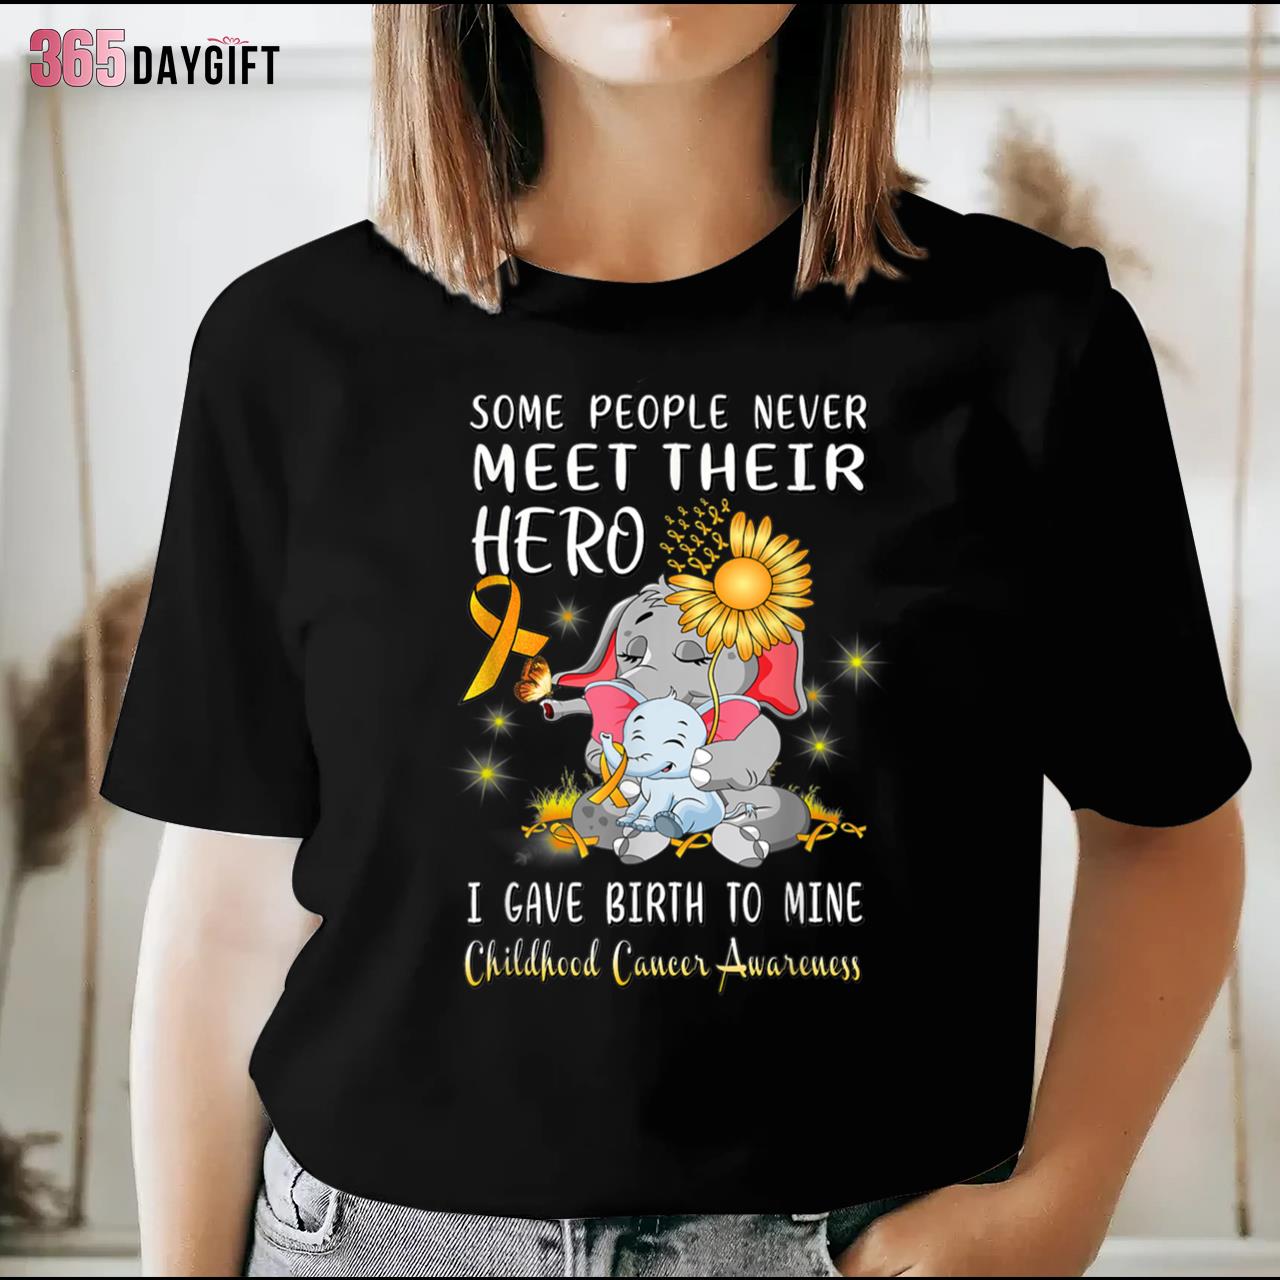 Childhood Cancer Awareness Shirts Survivor Warrior